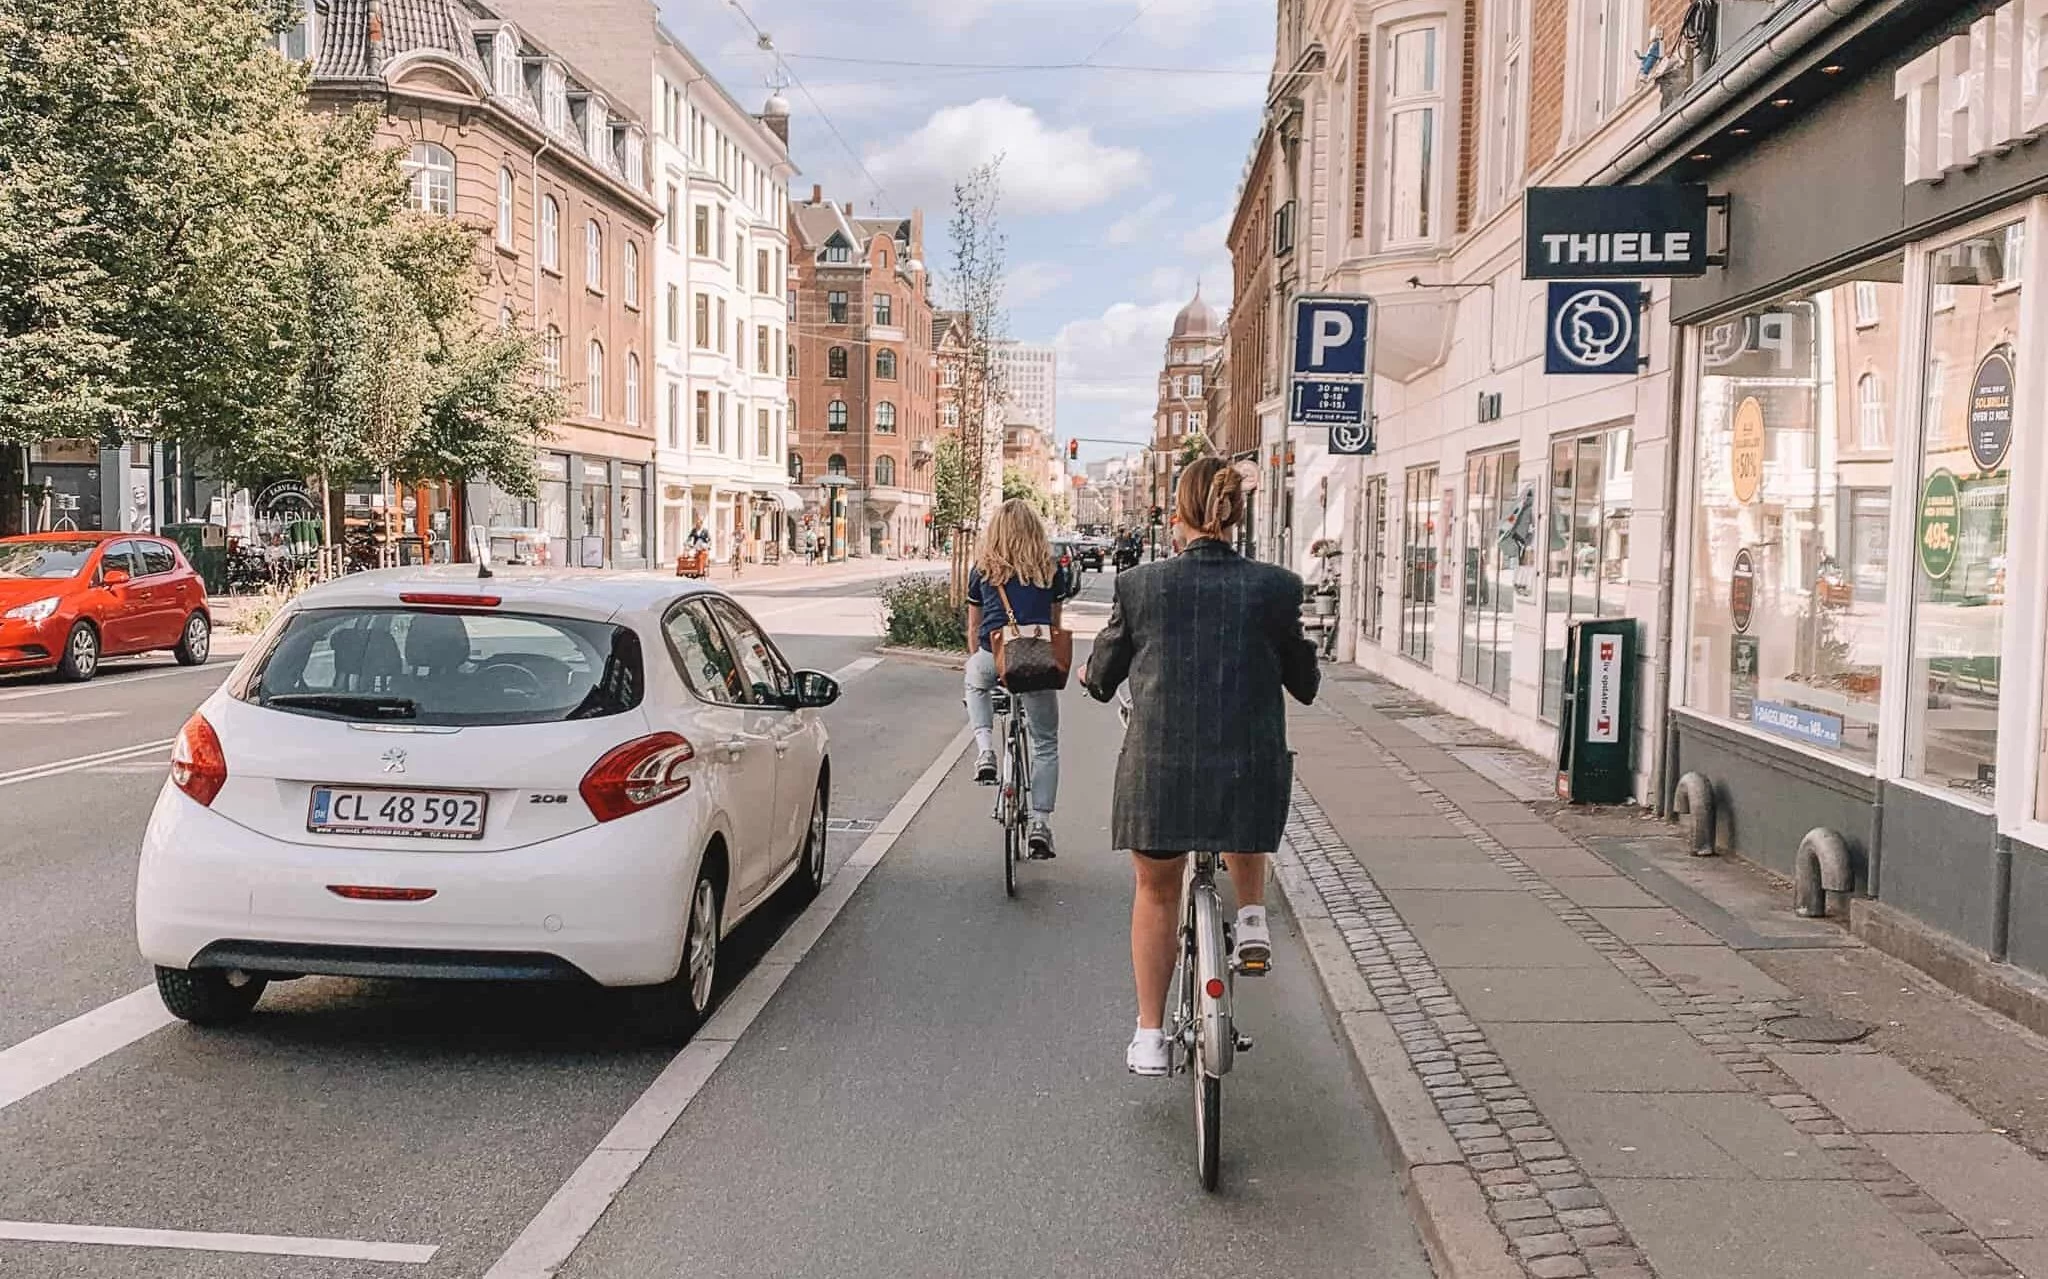 blog post about bike tours in Copenhagen